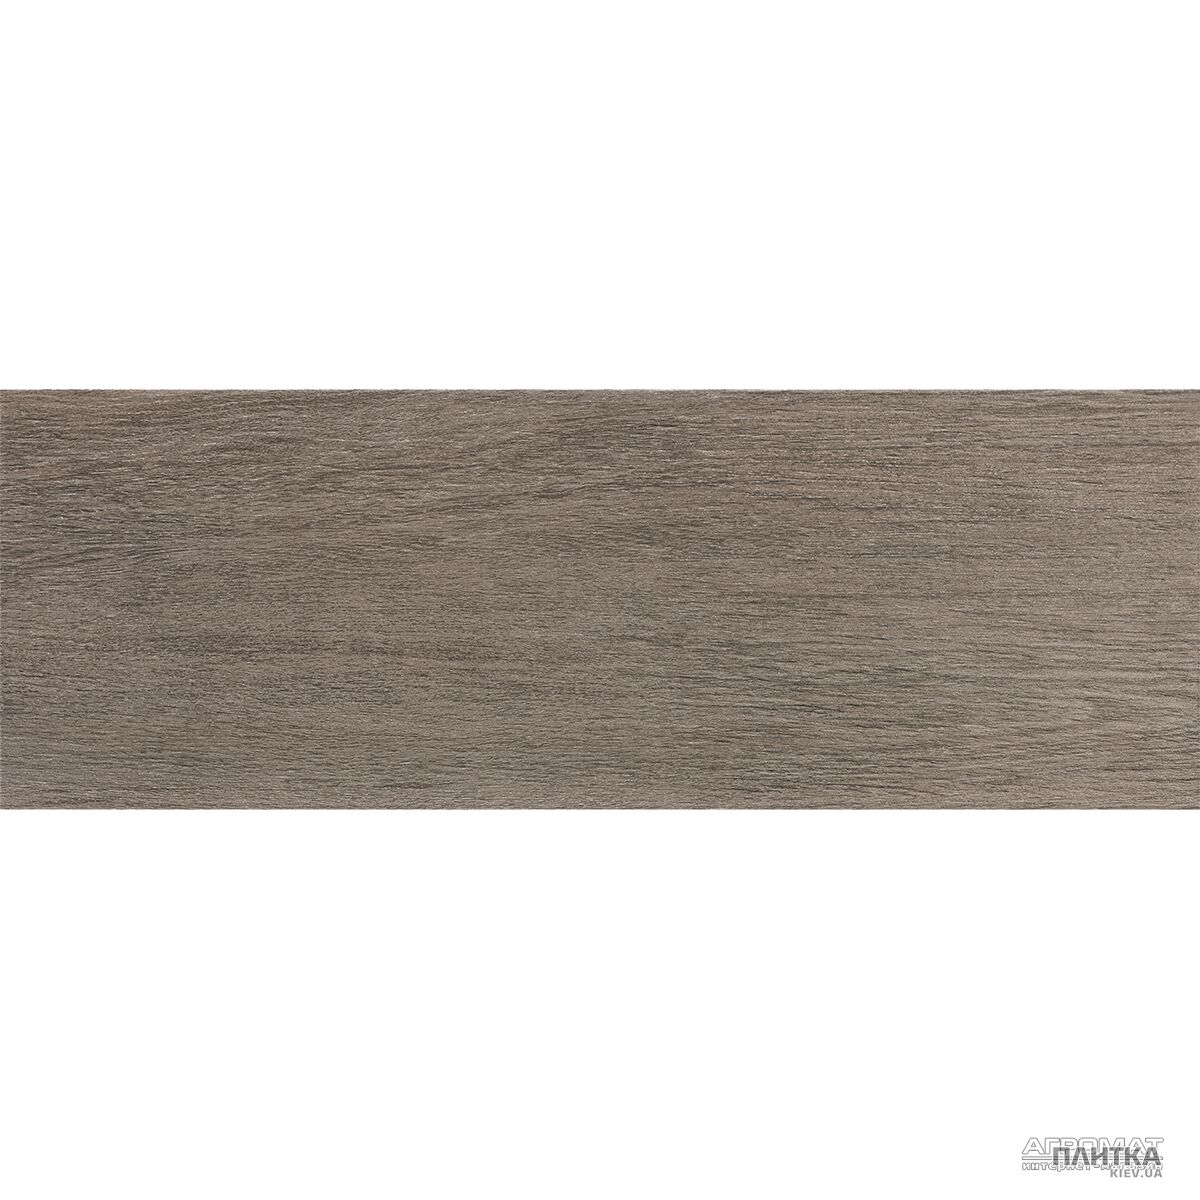 Підлогова плитка Argenta Malden MALDEN OLIVO коричневий,сірий